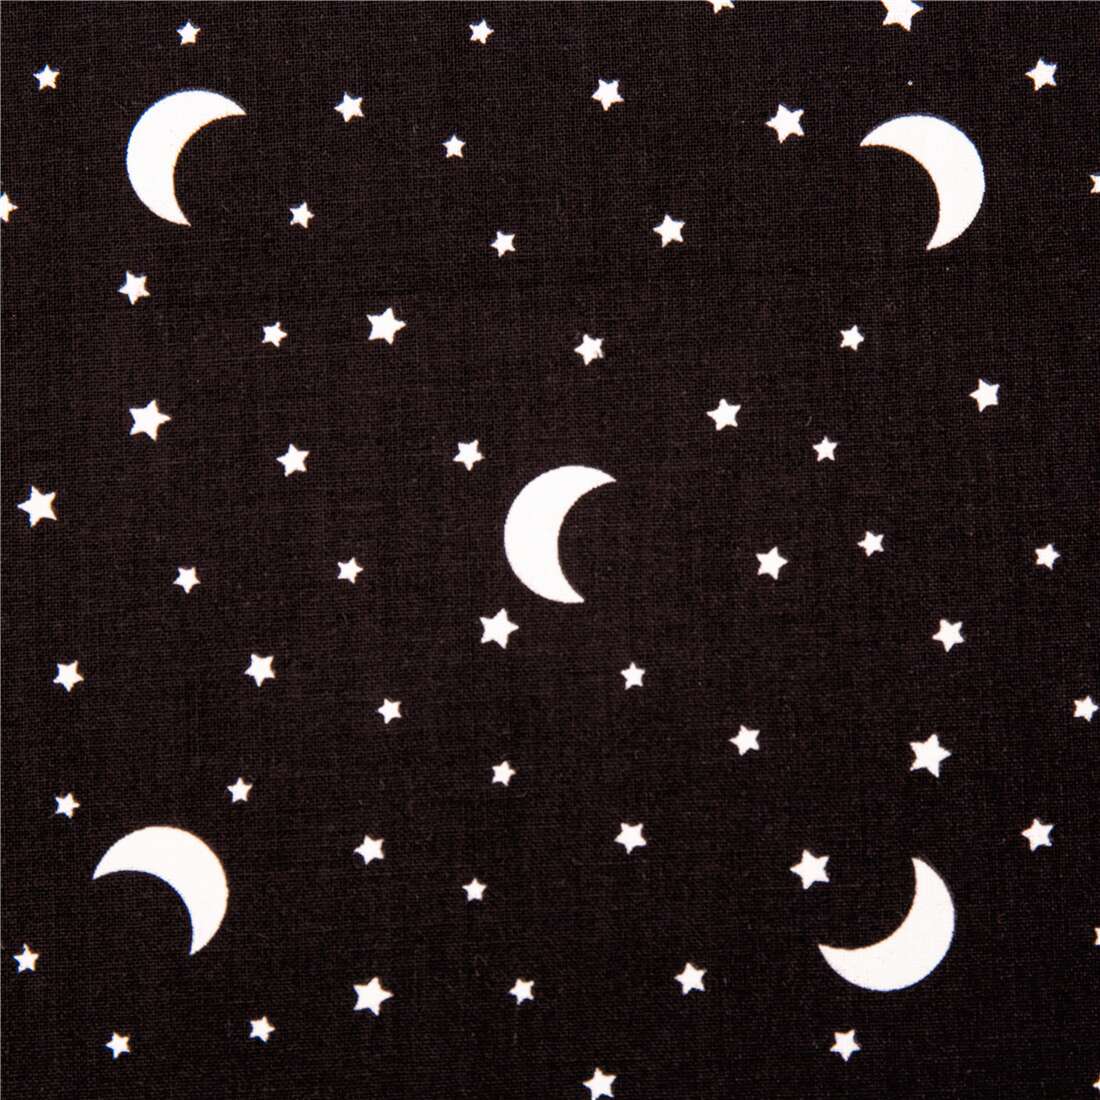 moon and stars Michael Miller black cotton fabric lunar glow in the dark -  modeS4u